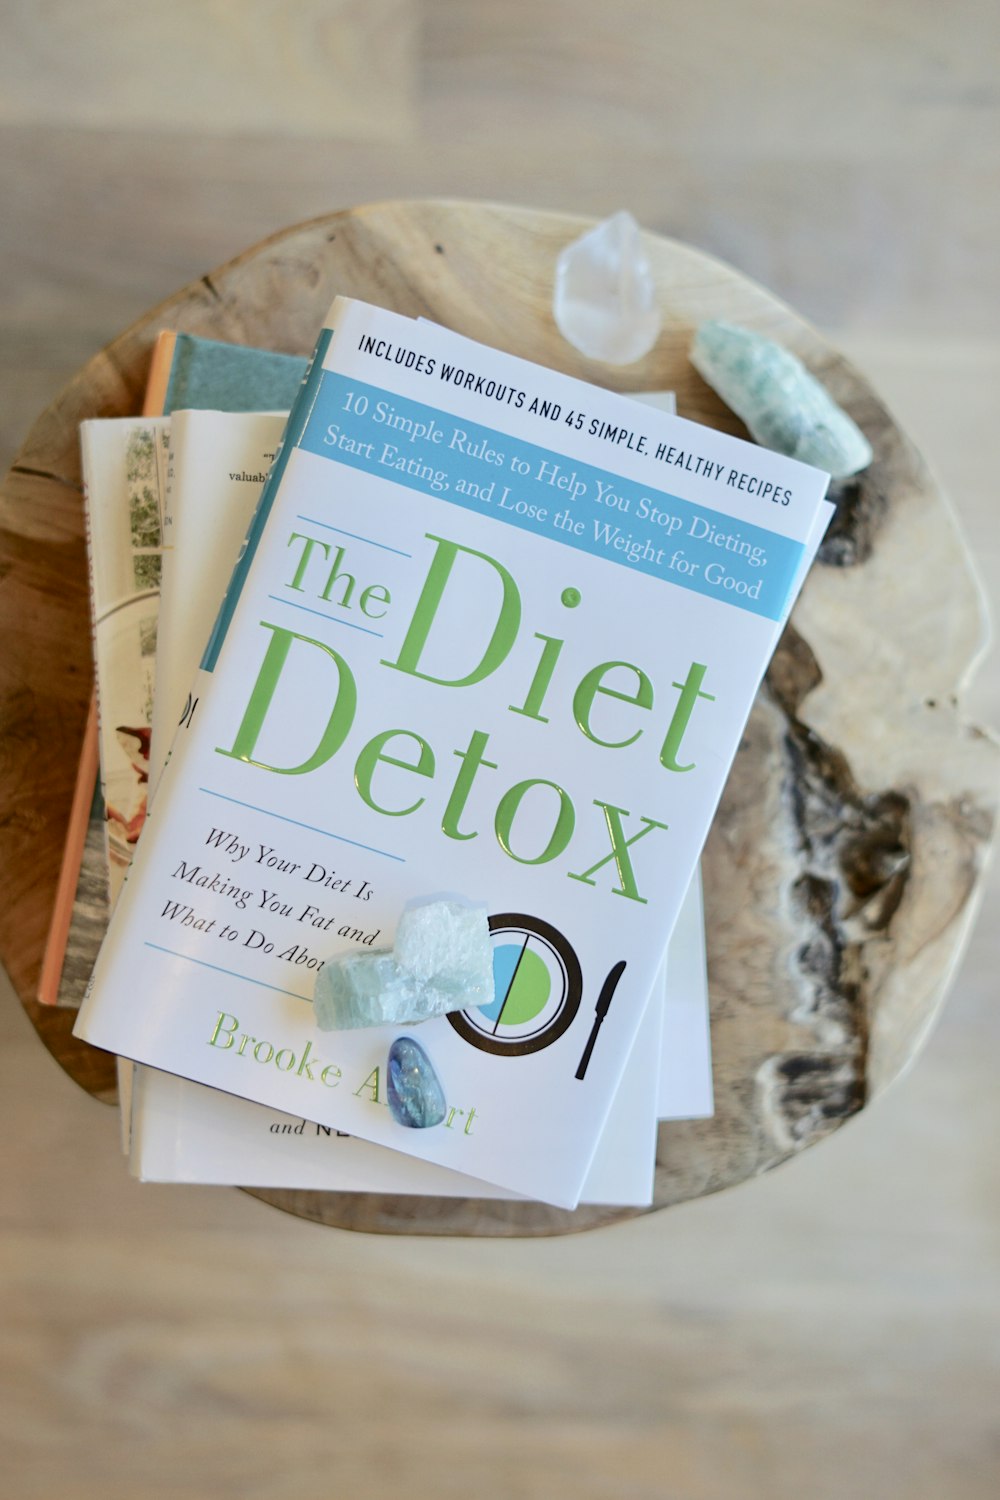 The Diet Detox book